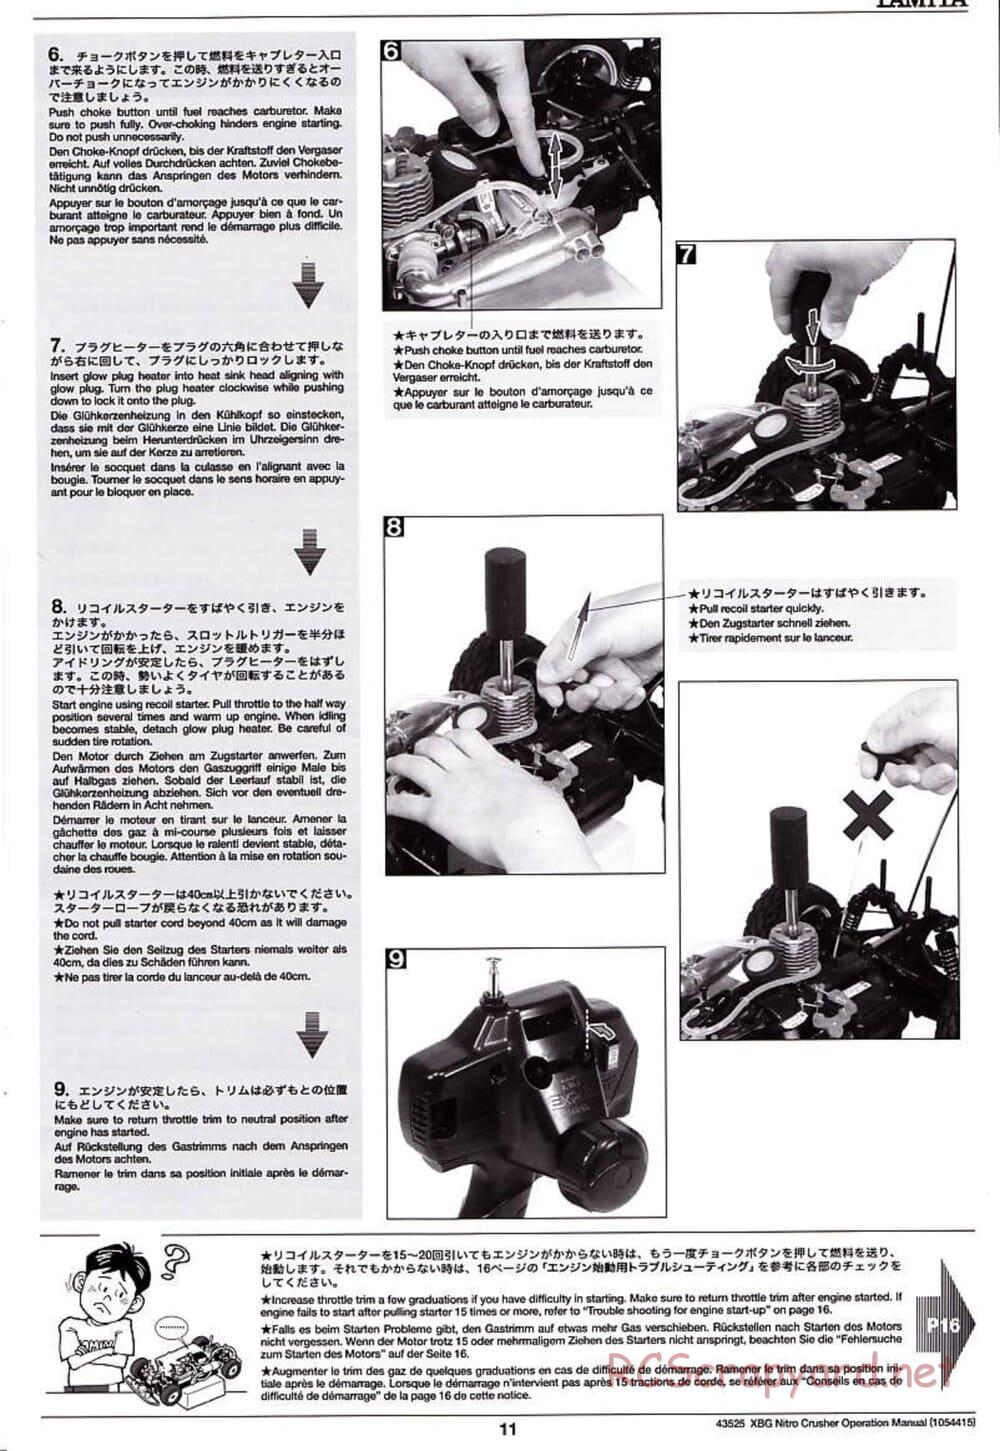 Tamiya - Nitro Crusher - NDF-01T - Operating Manual - Page 11